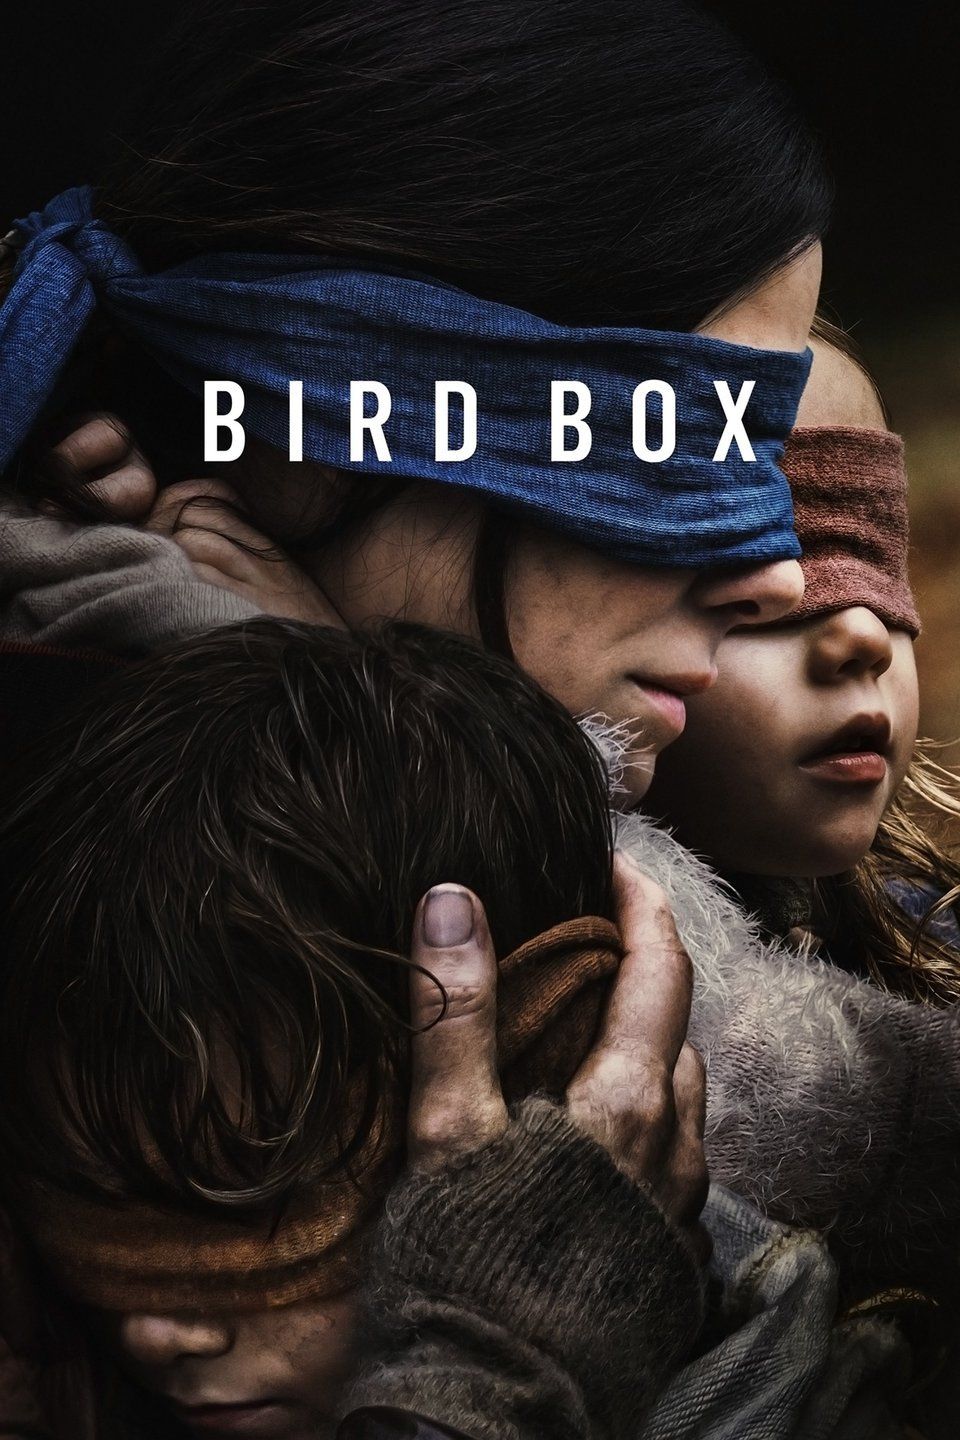 mothers day movies bird box